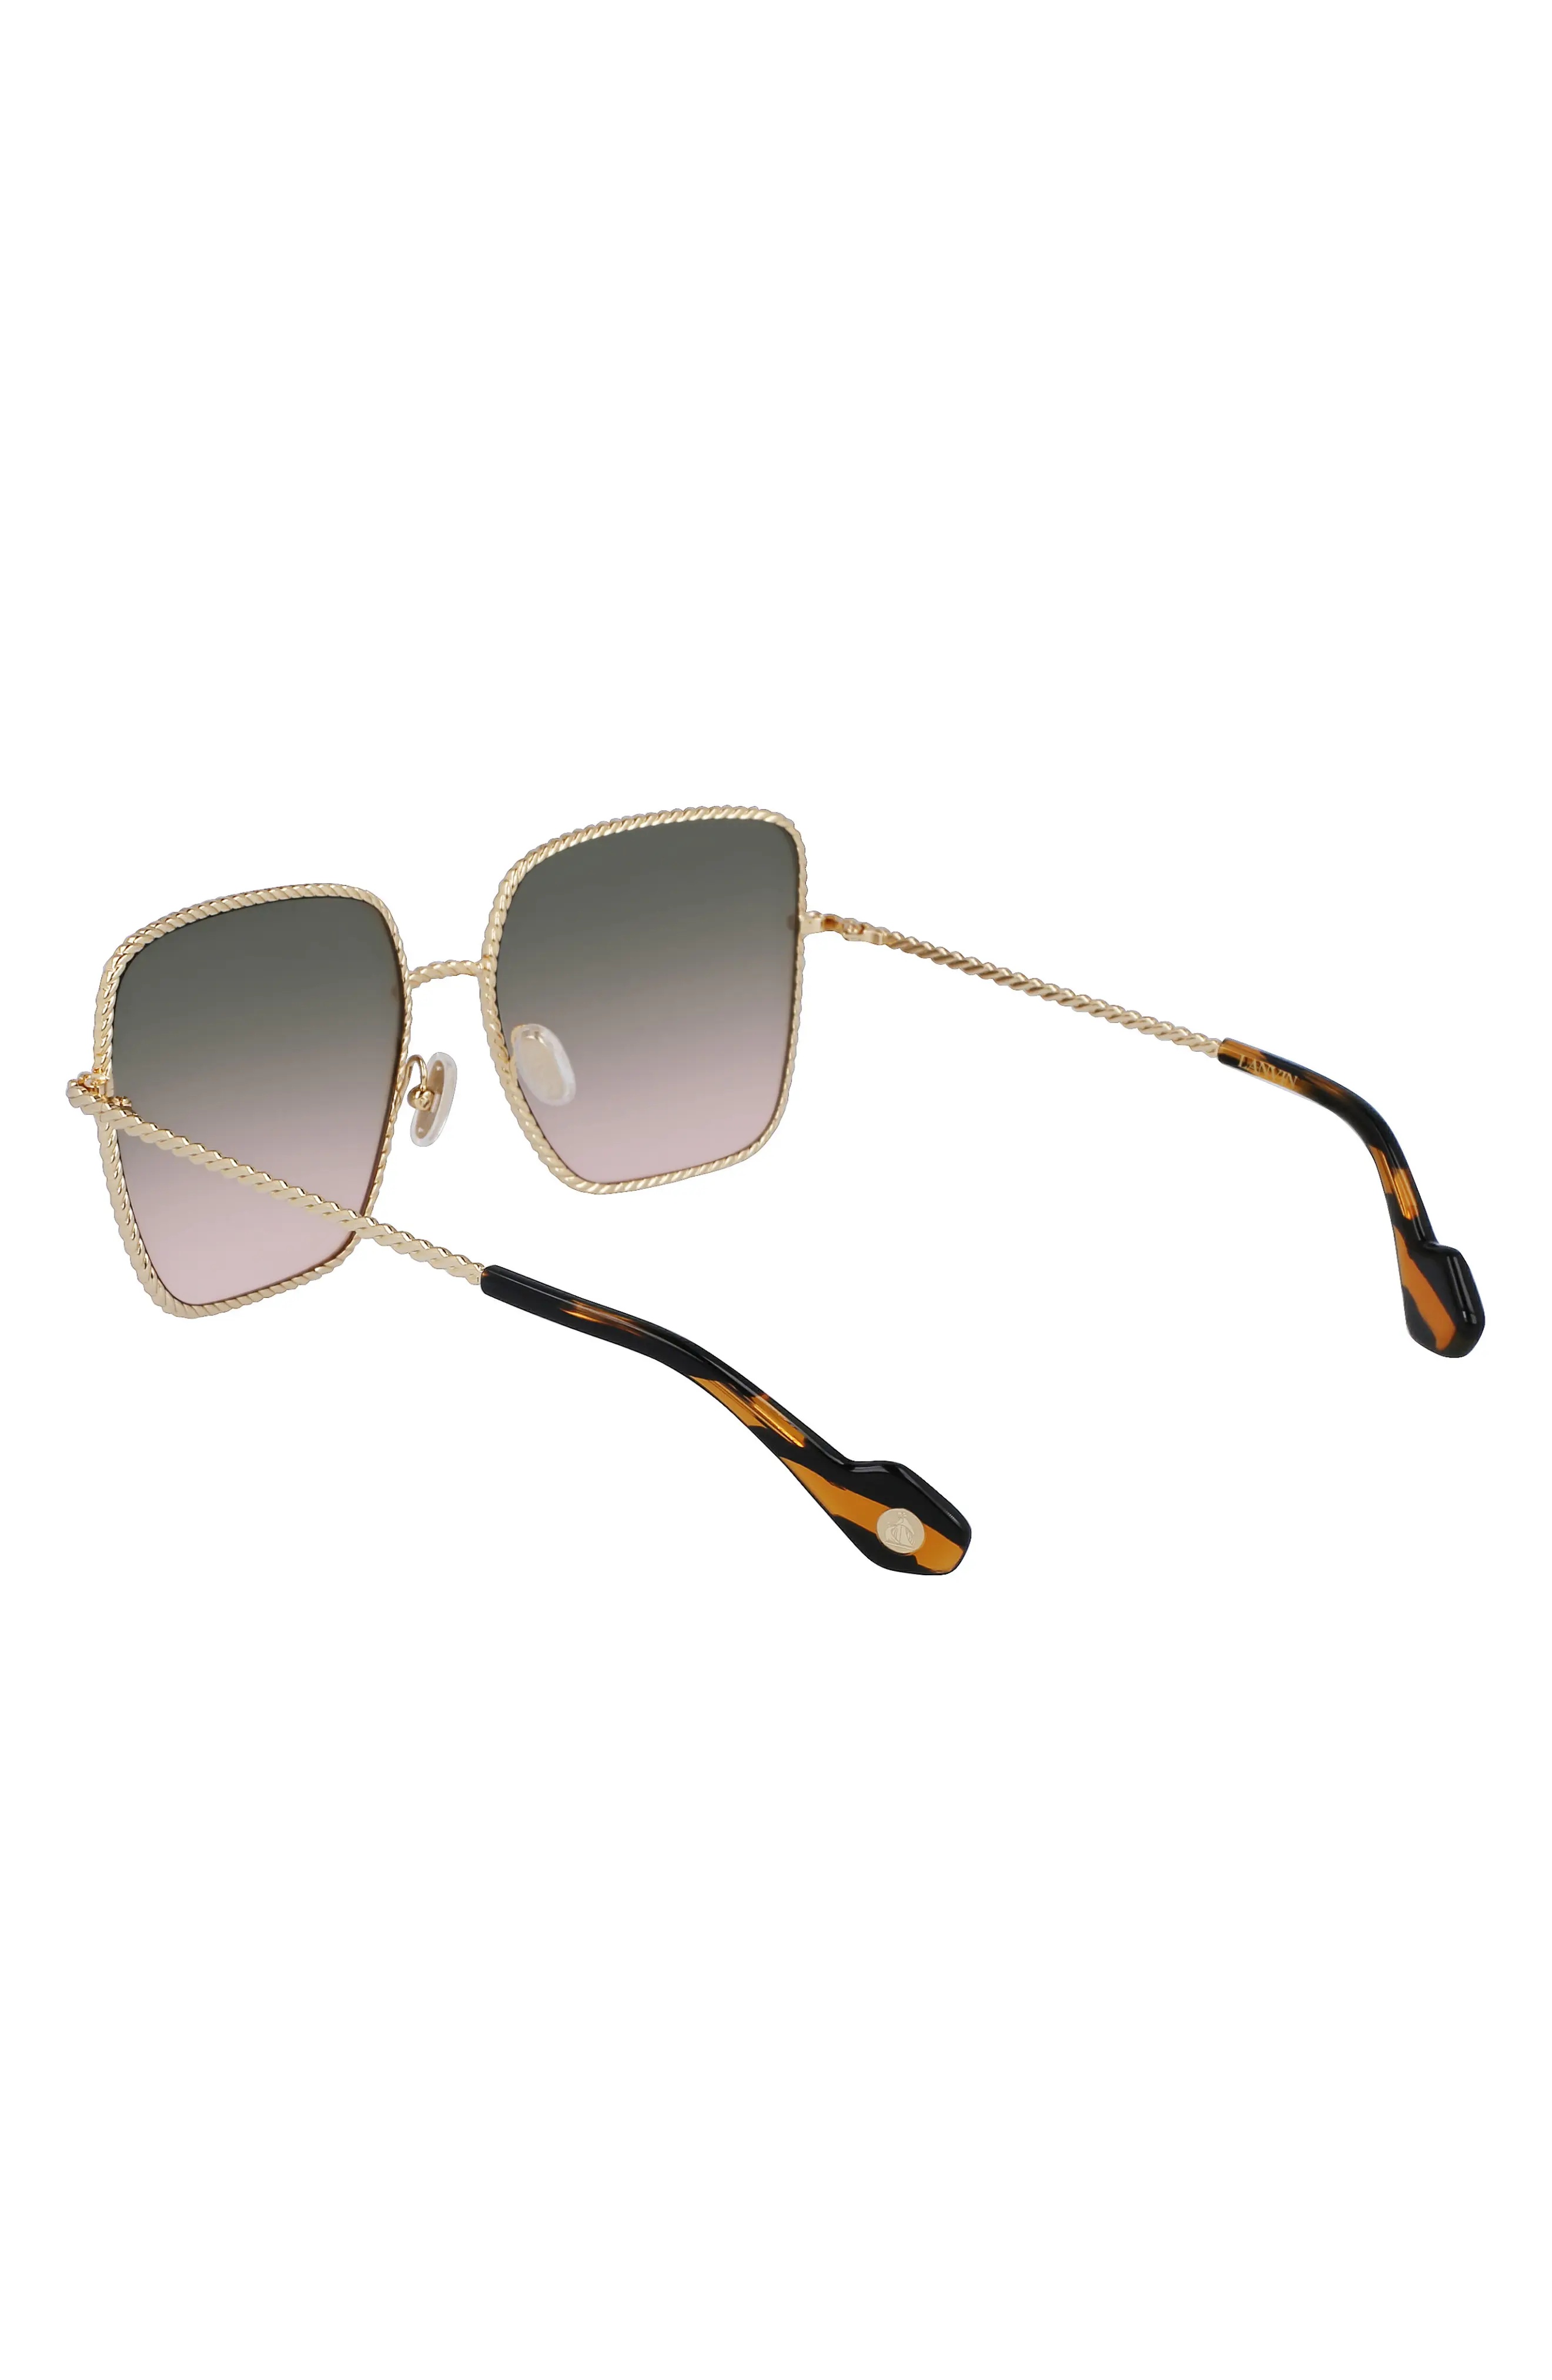 Babe 59mm Gradient Square Sunglasses in Gold/Gradient Green Peach - 5